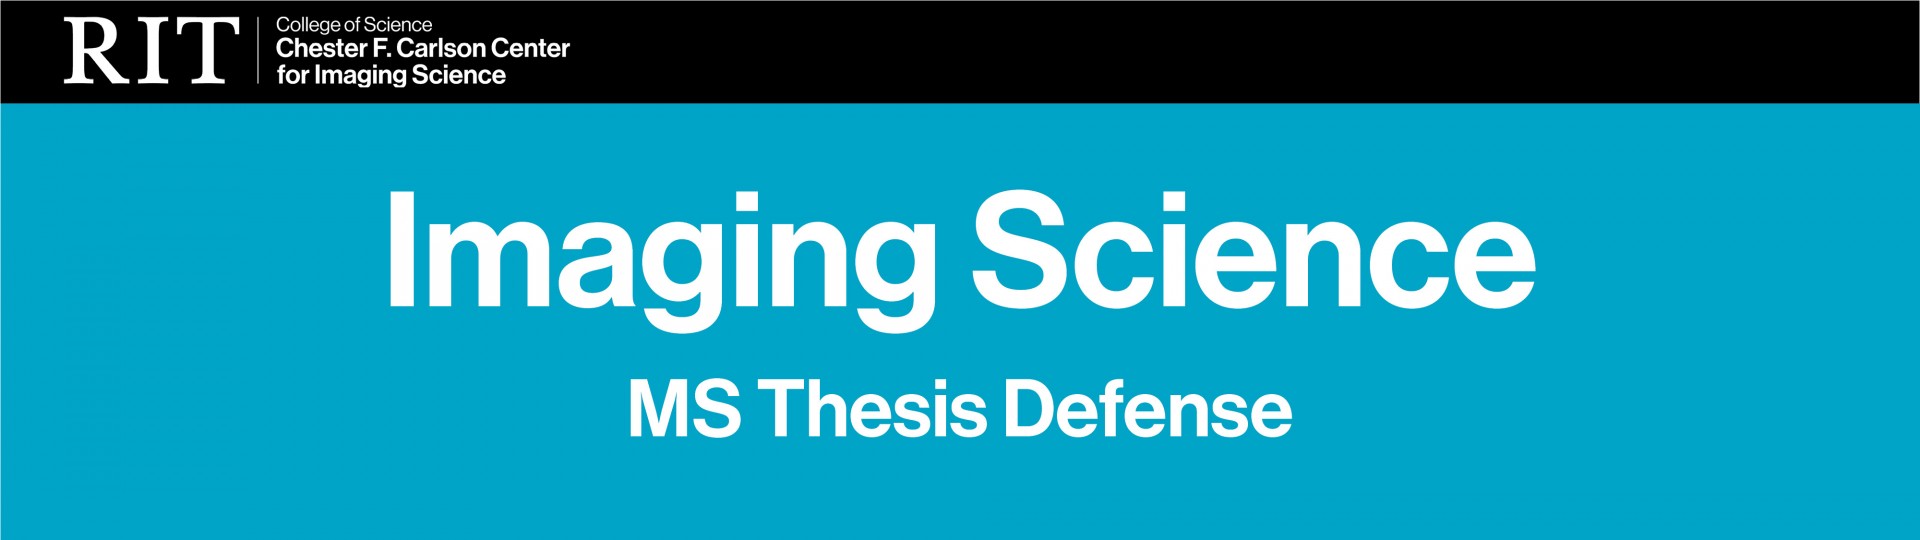 imaging science ms thesis defense christian lusardi